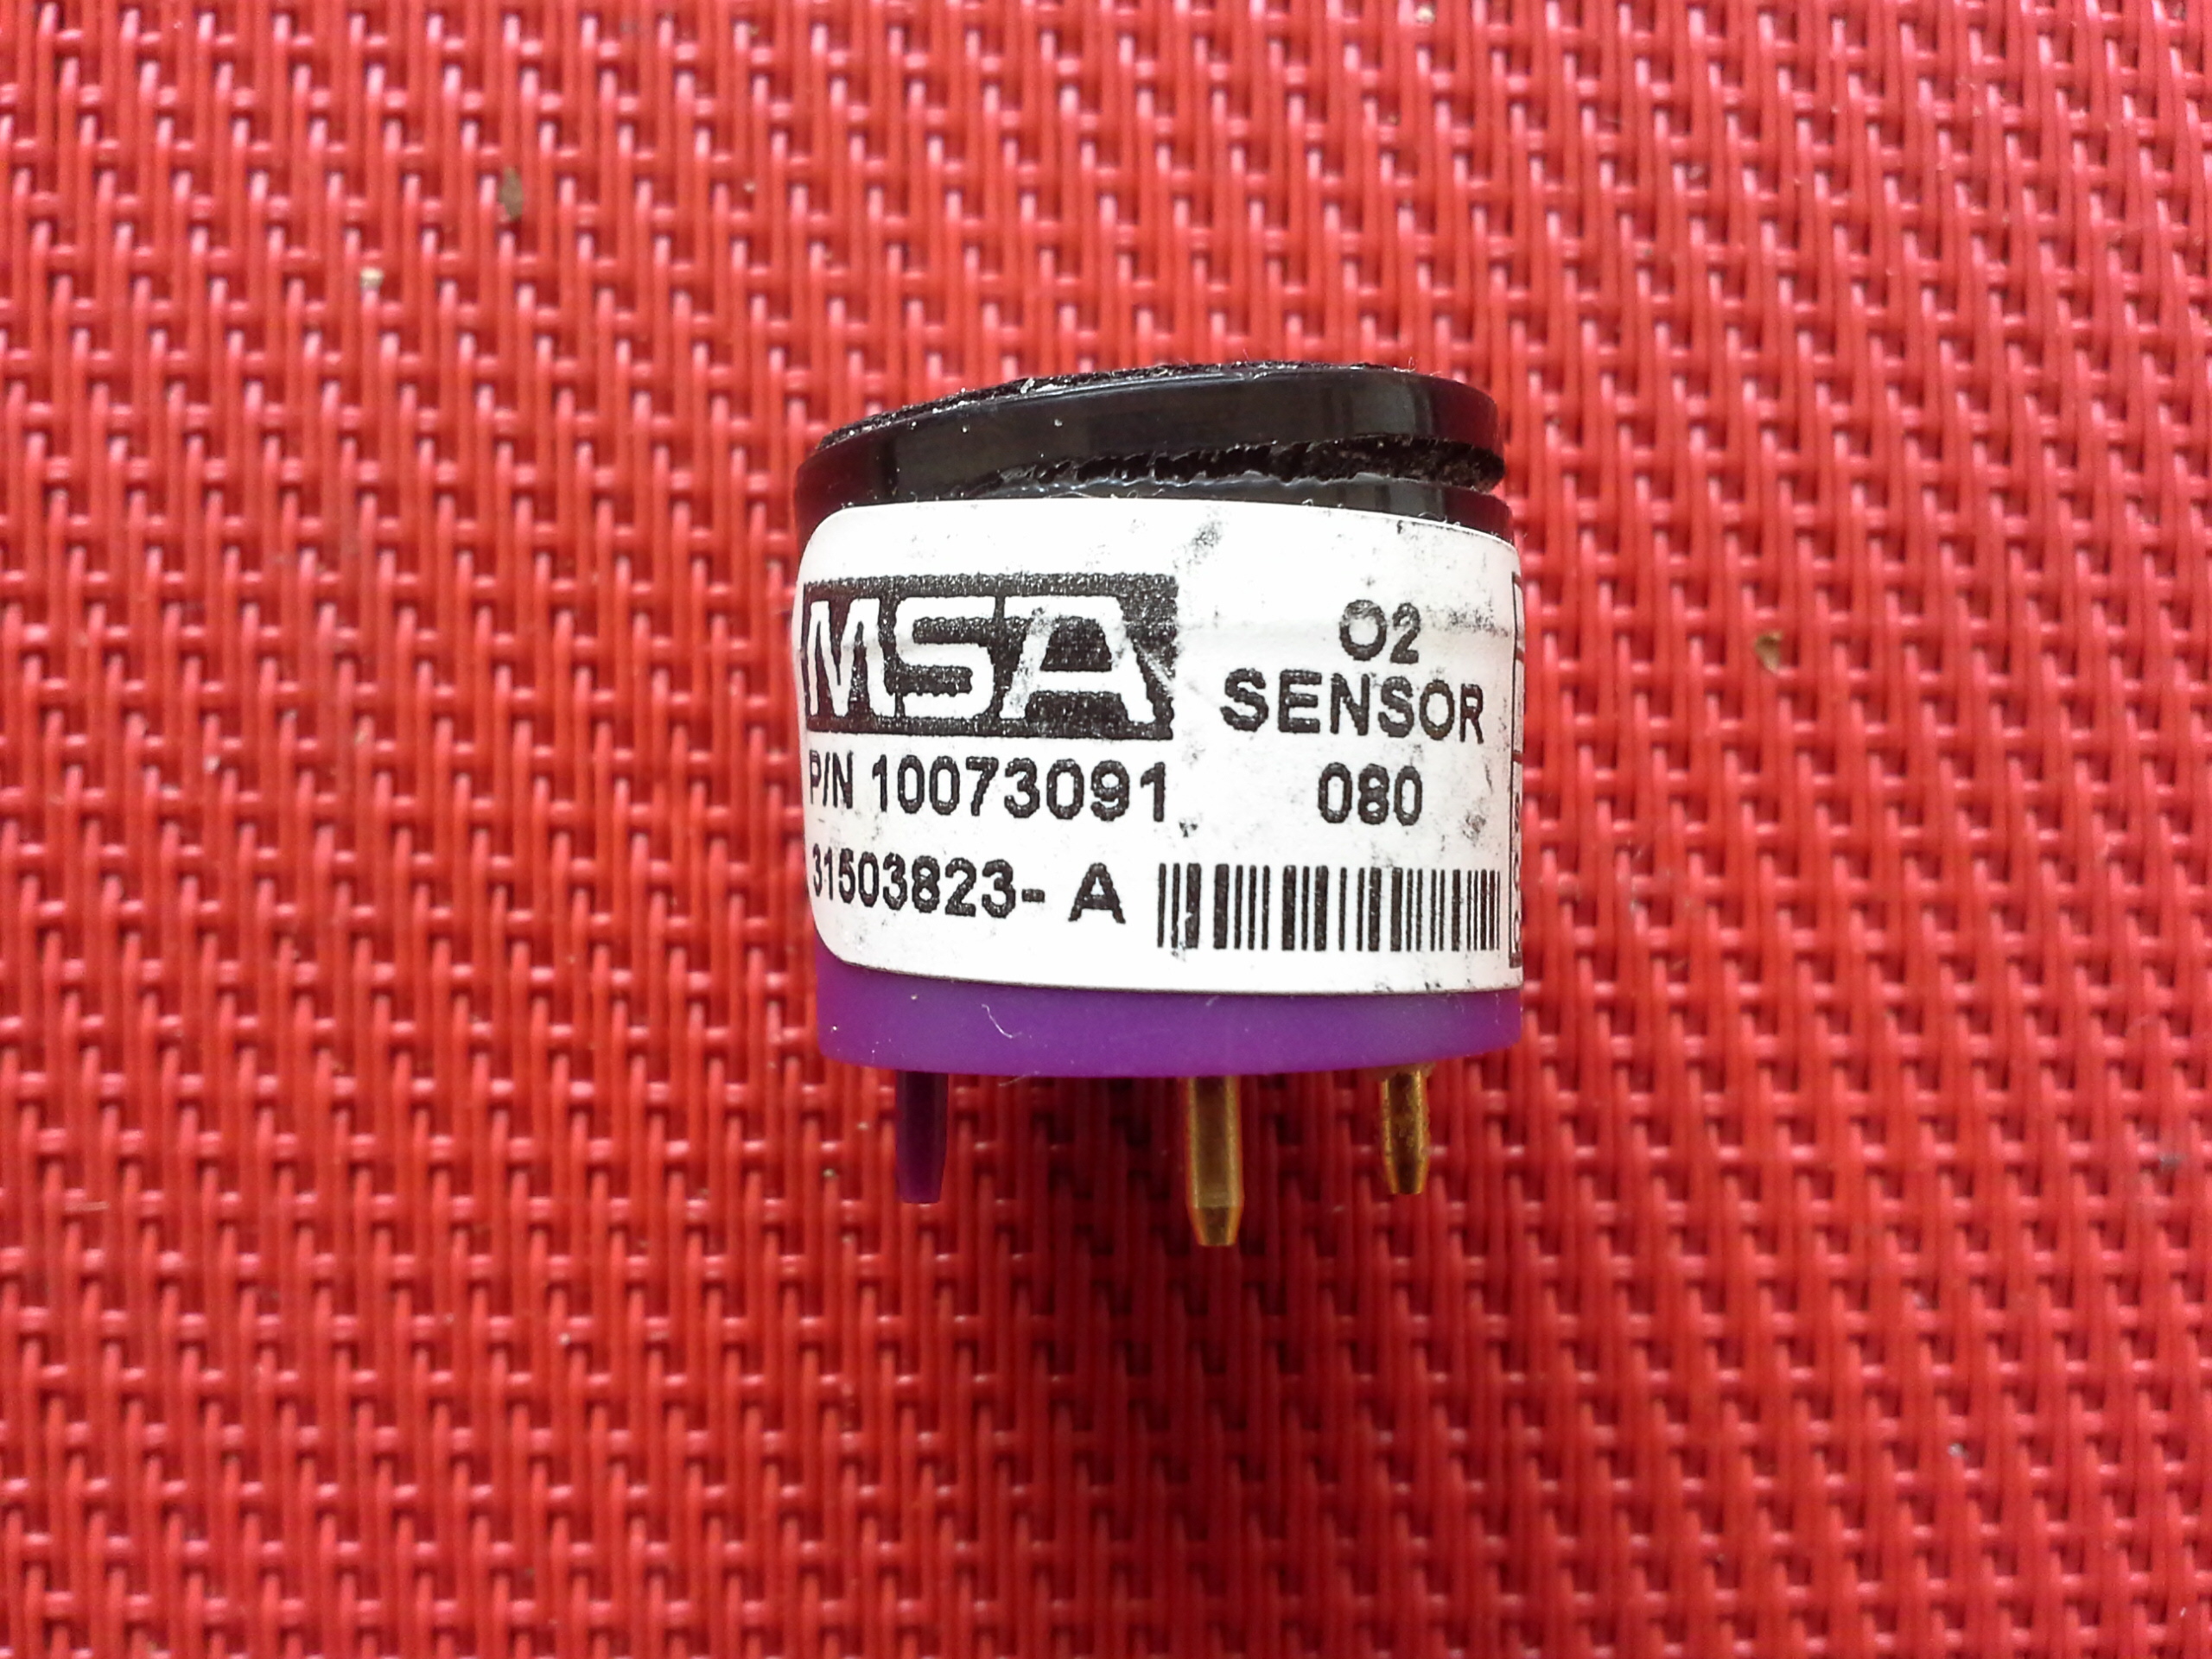 O2-Sensor 068 für Gaswarngeräte der Firma MSA